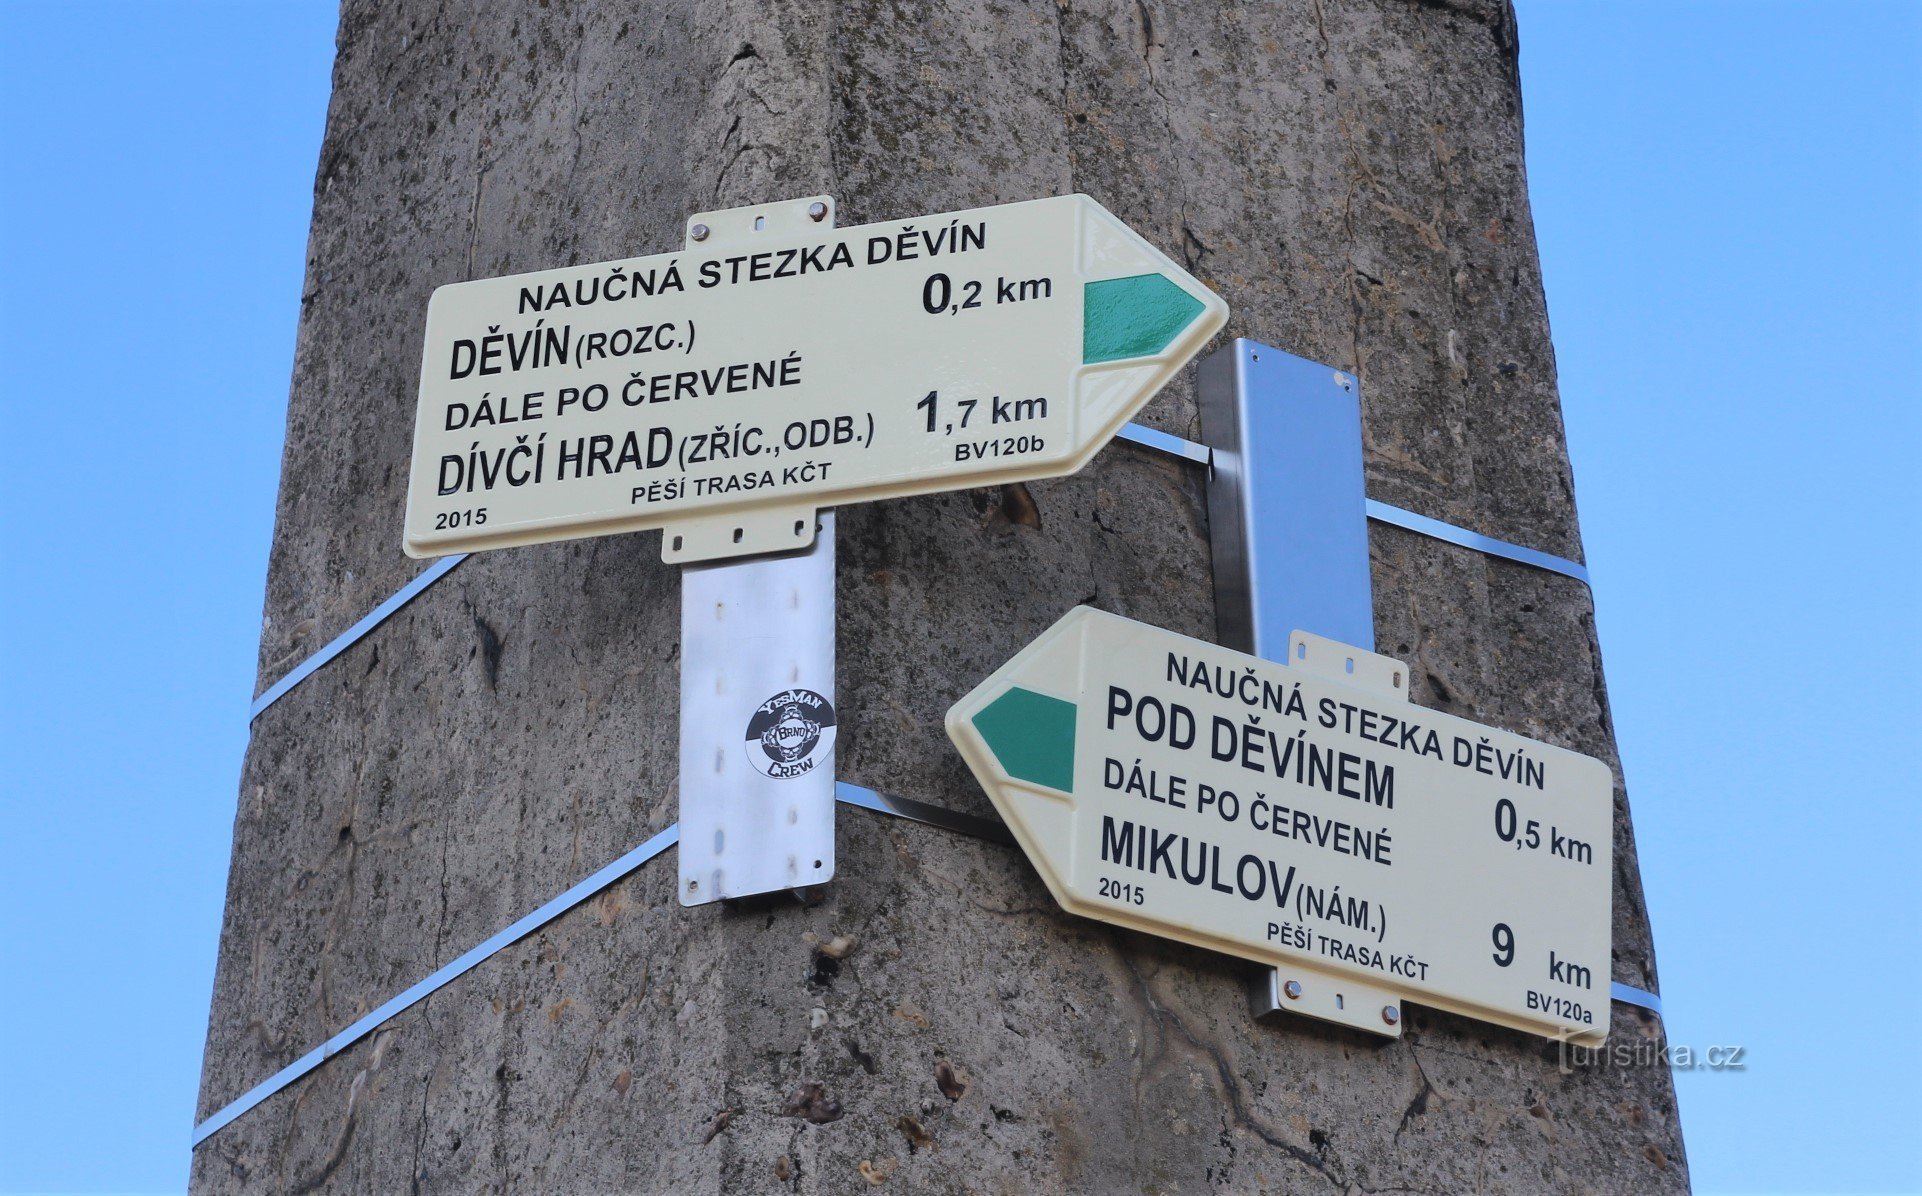 Tourist crossroads located on the pylon of the trigonometric point